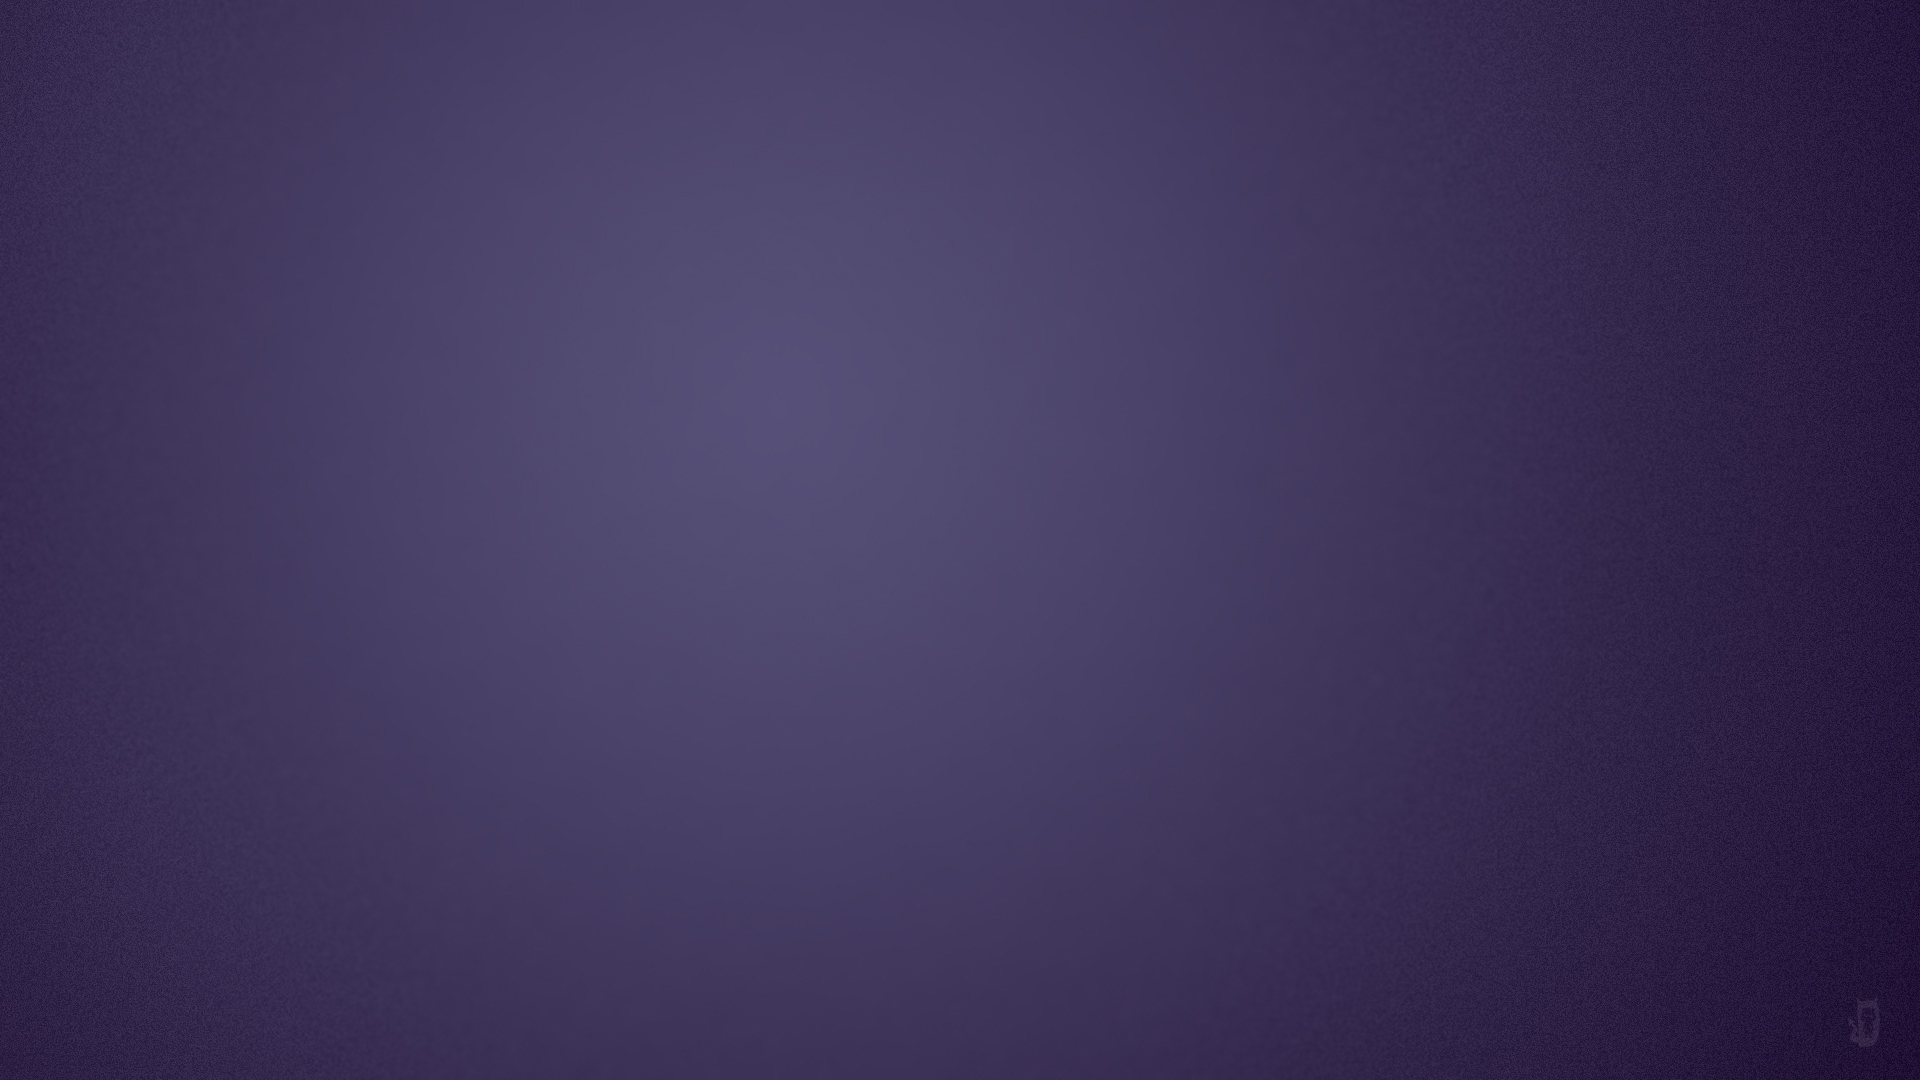 General 1920x1080 minimalism abstract gradient purple